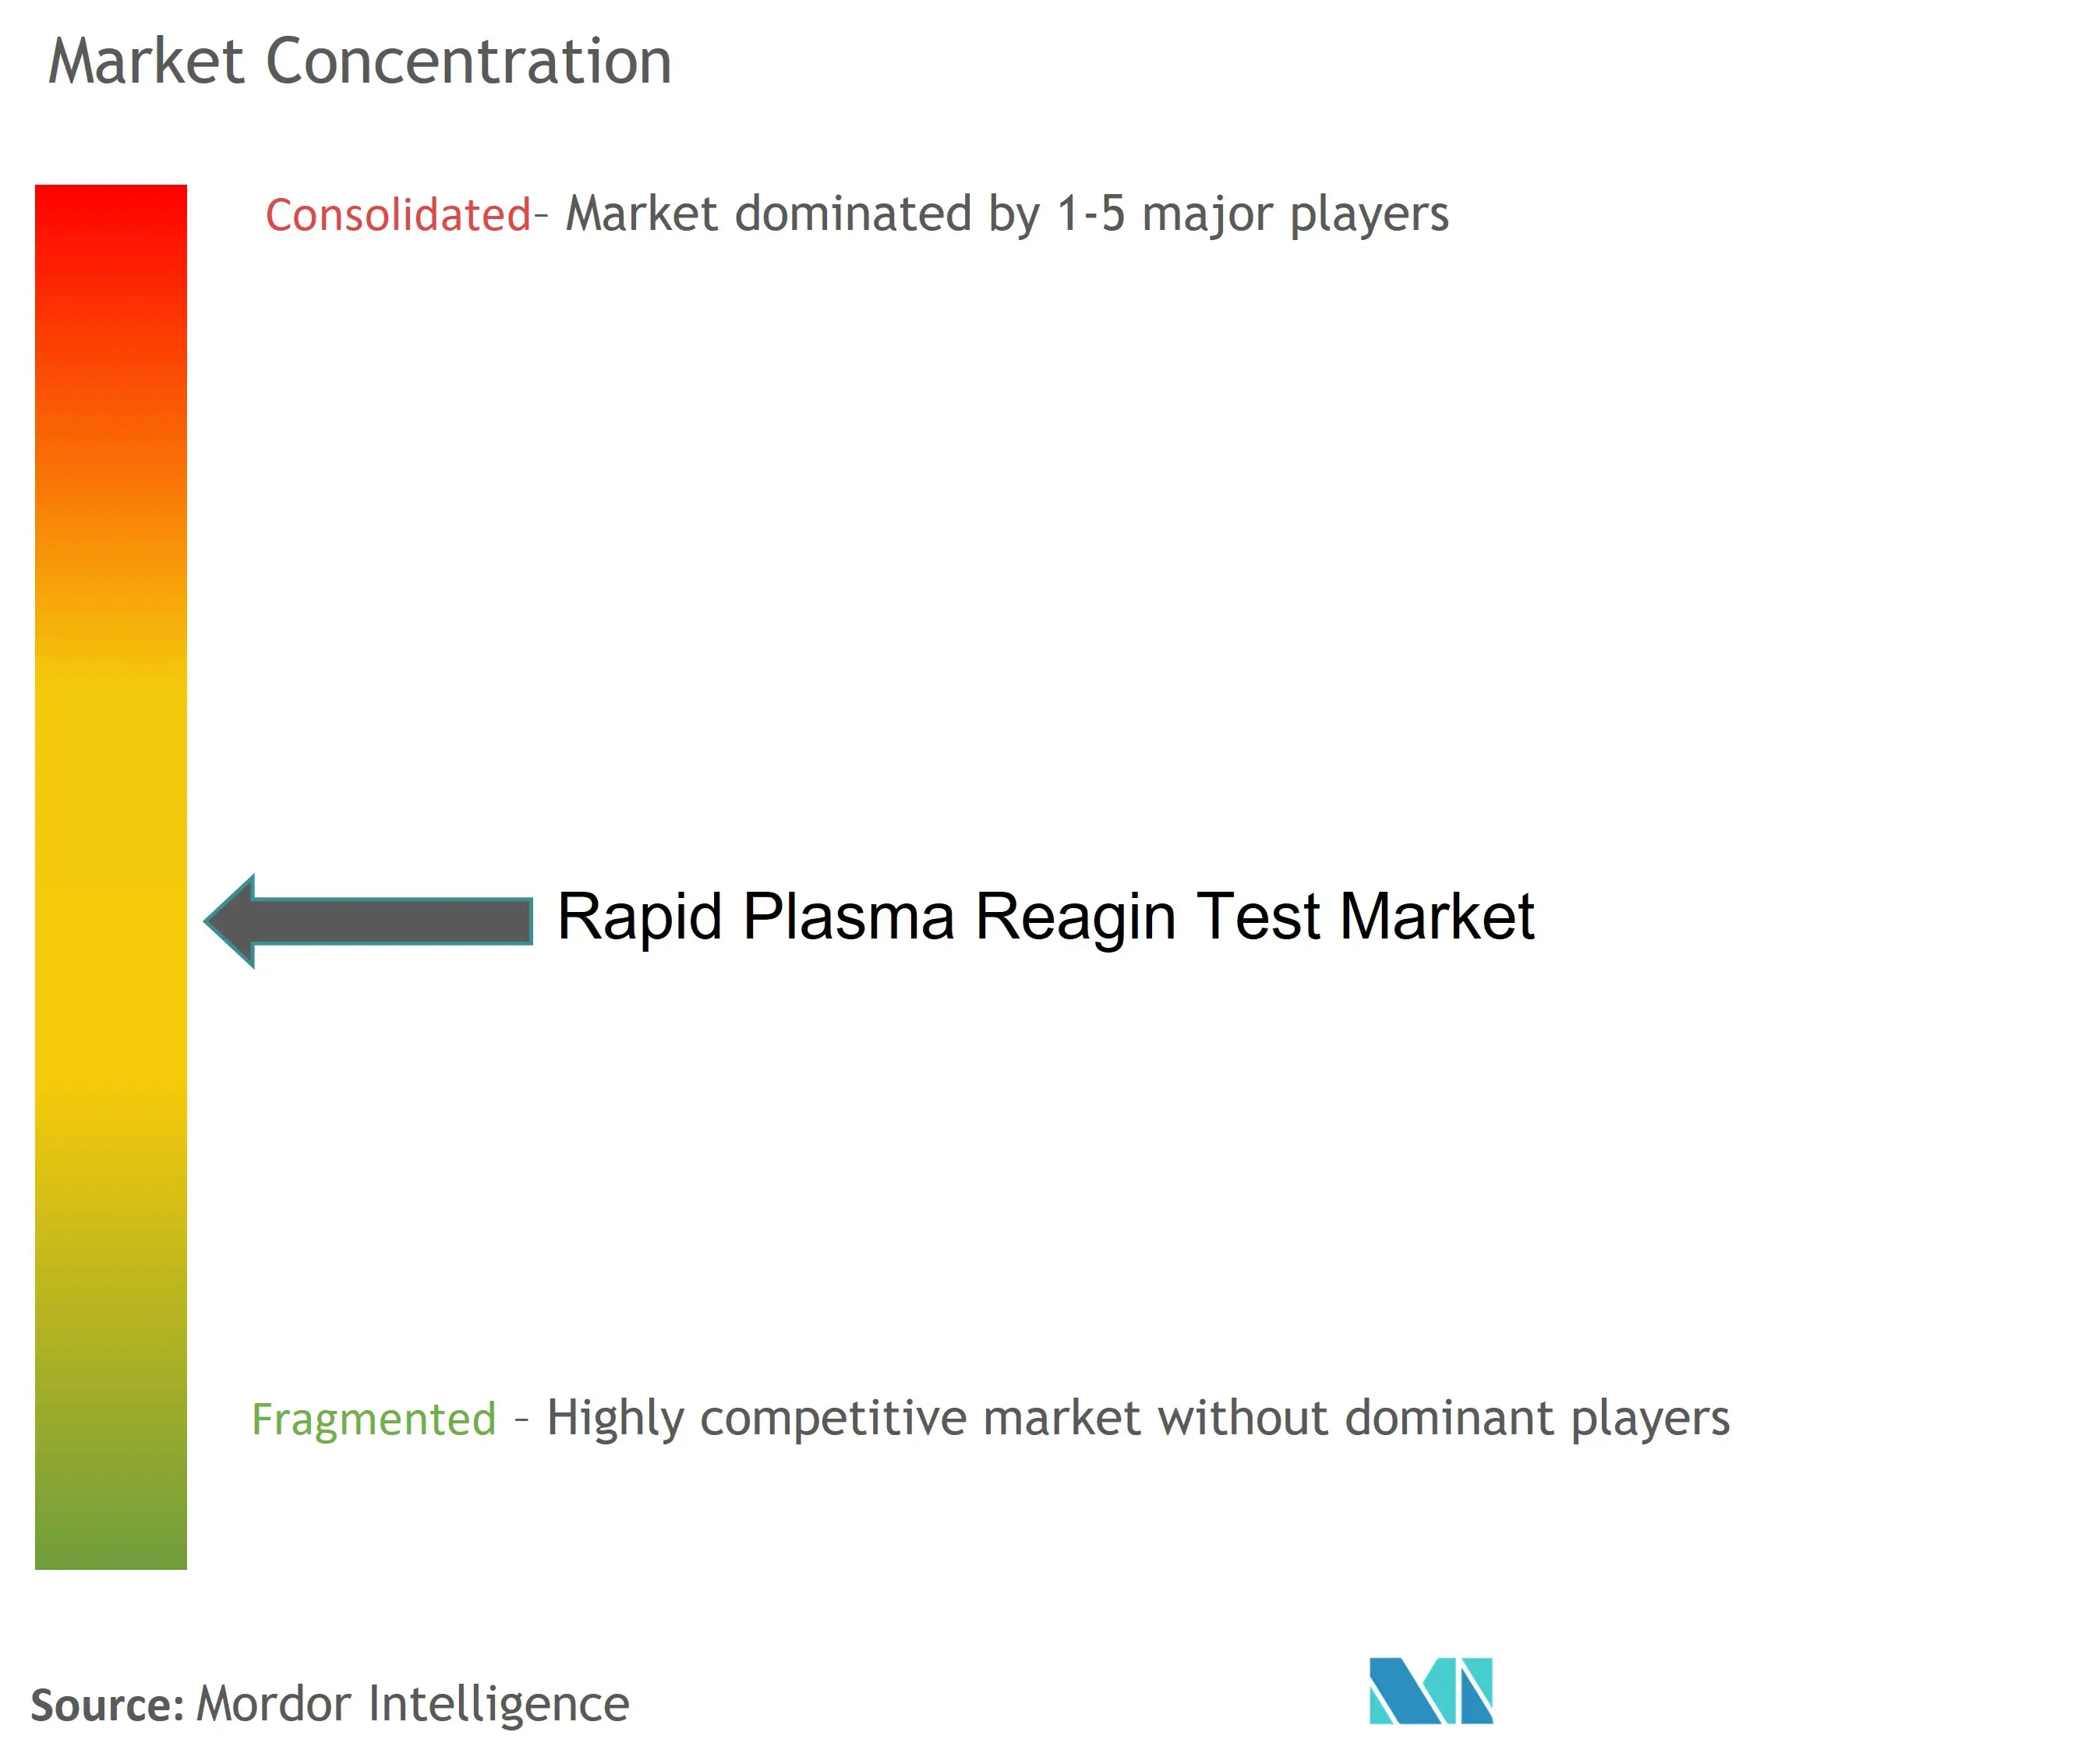 Rapid Plasma Reagin Test Market Concentration